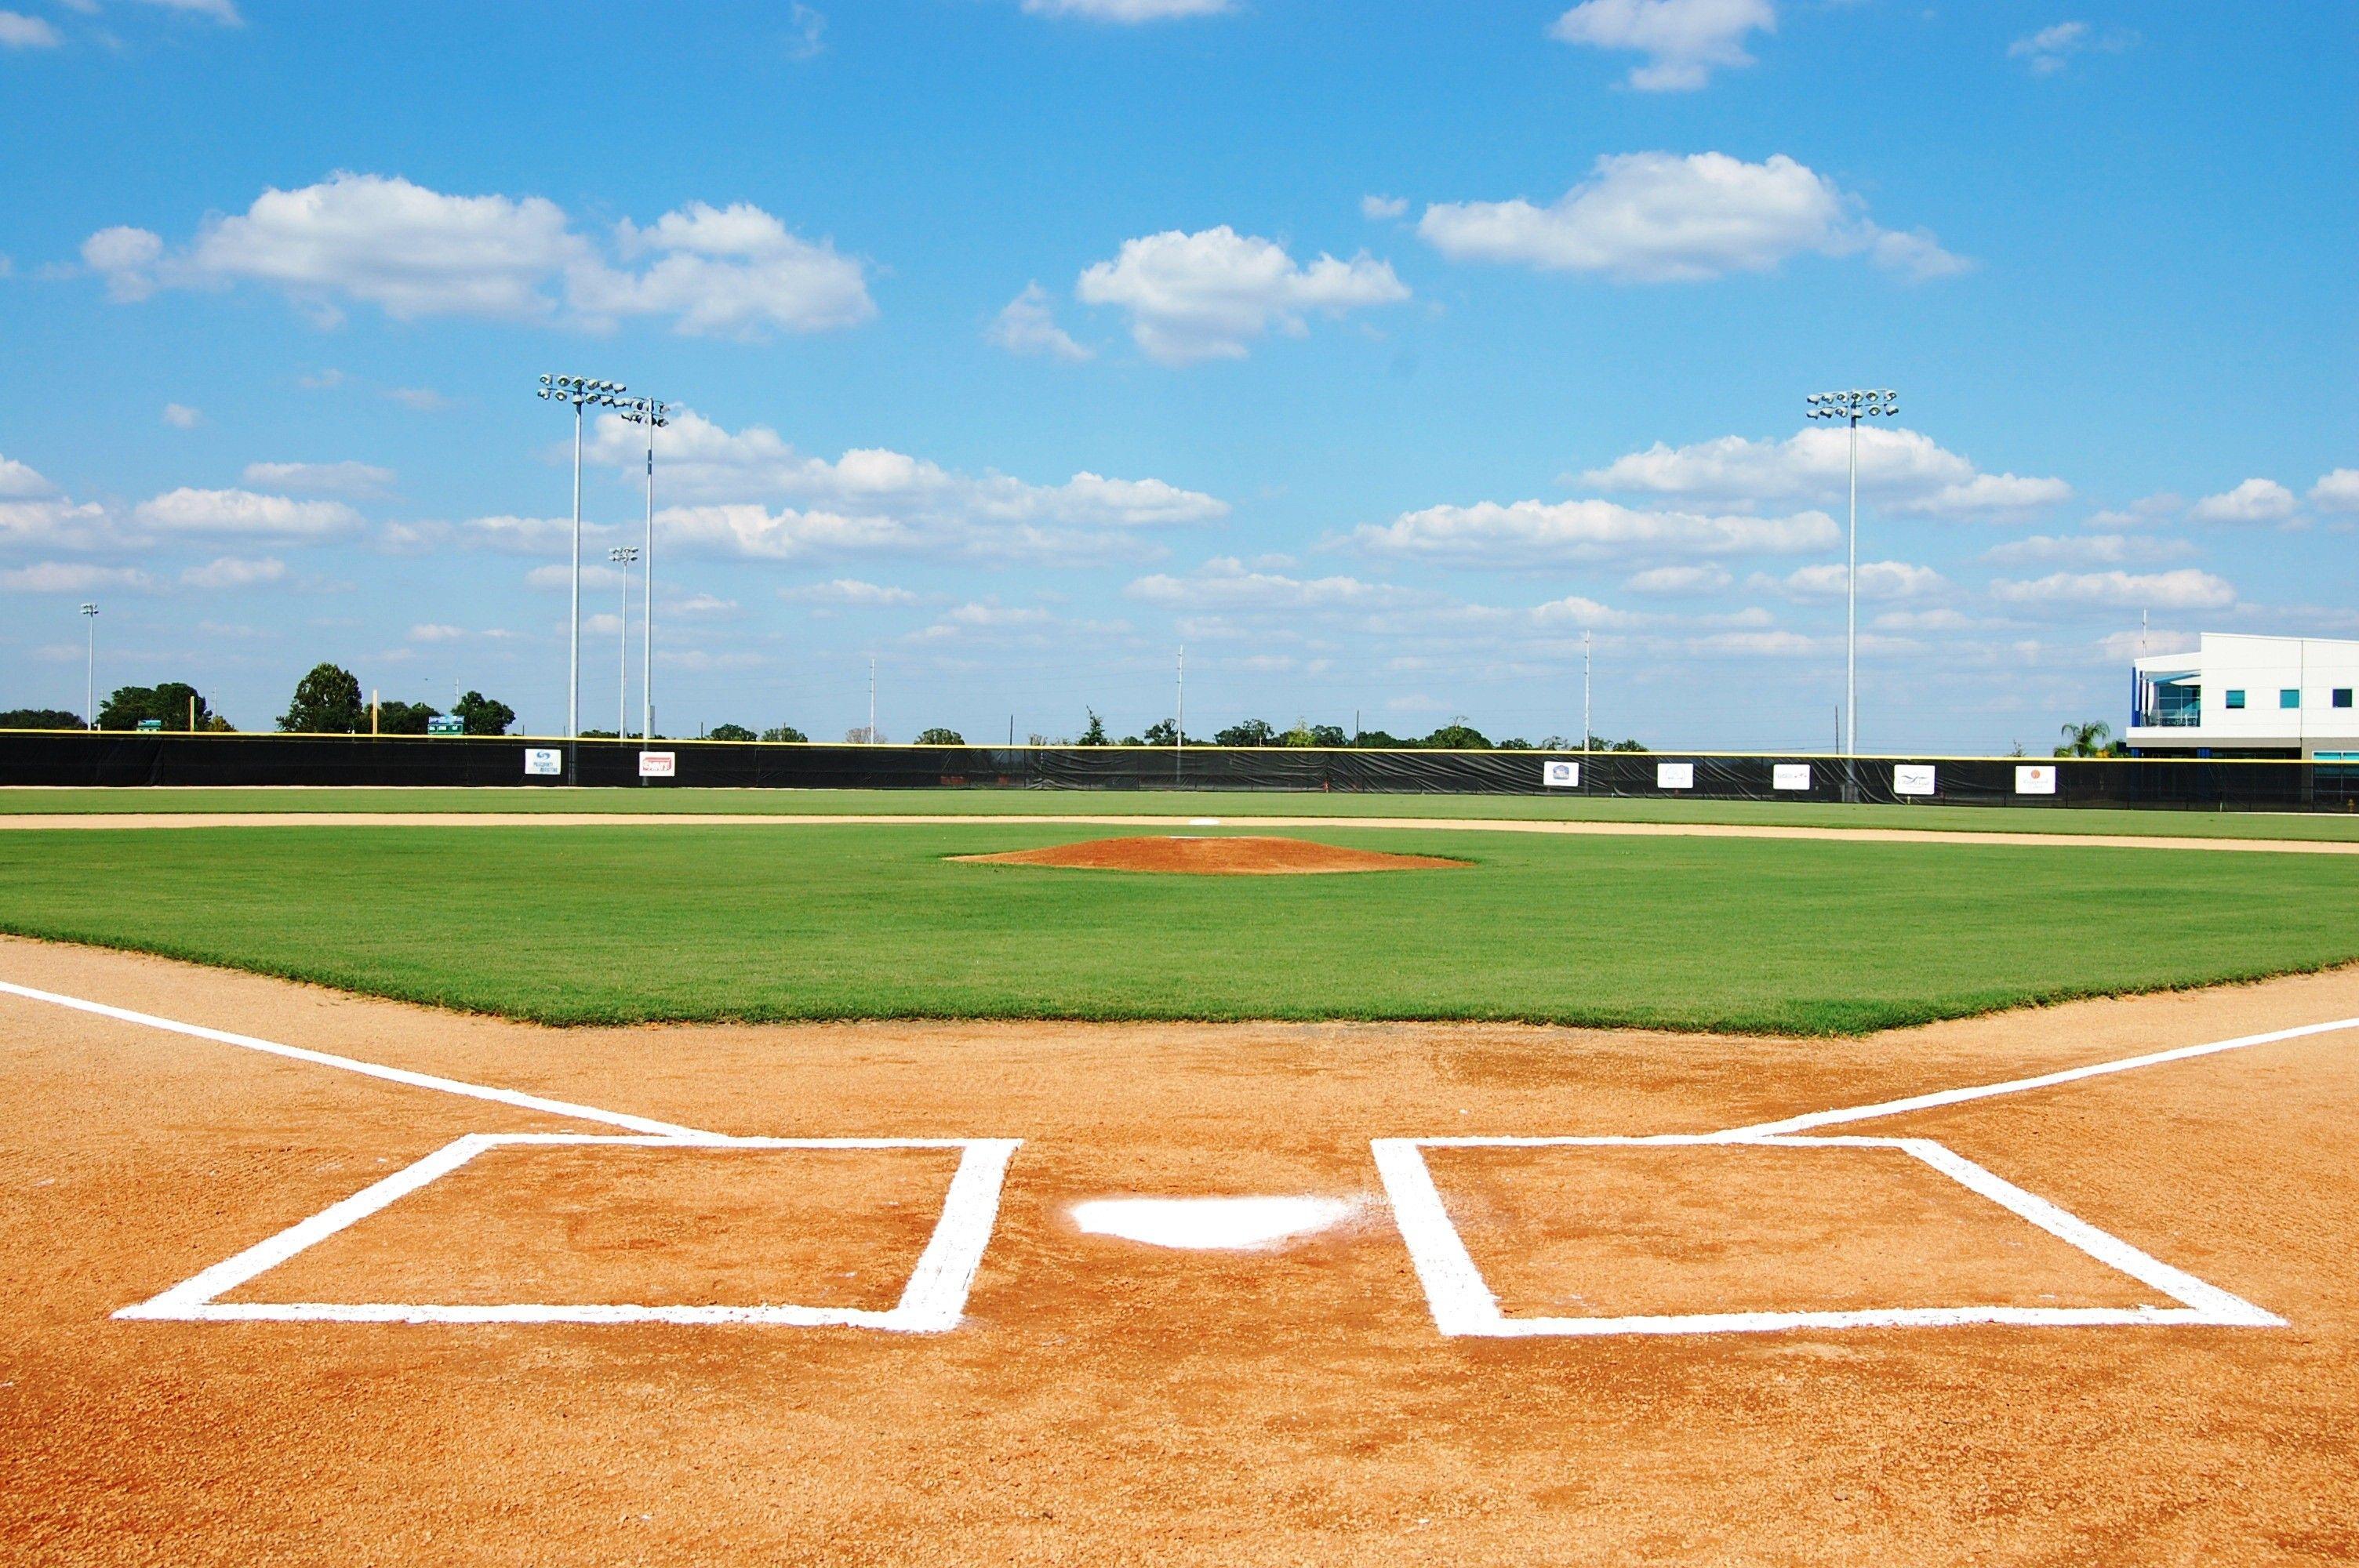 Matched field. Софтбол поле. Софтбол и Бейсбол. Поле для бейсбола. Спортивное поле.